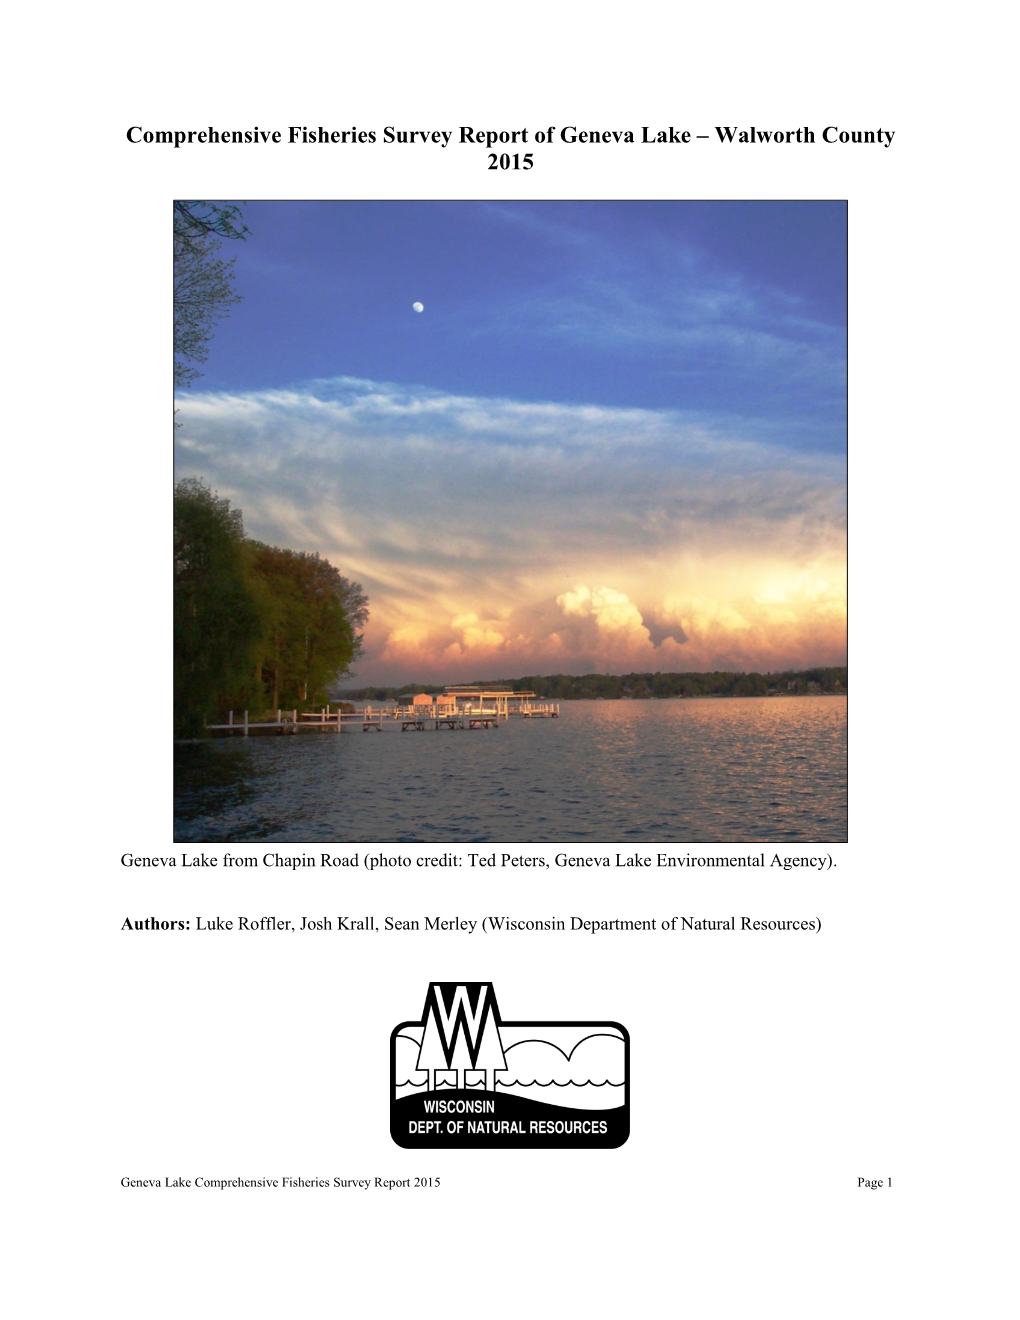 Comprehensive Fisheries Survey Report of Geneva Lake – Walworth County 2015